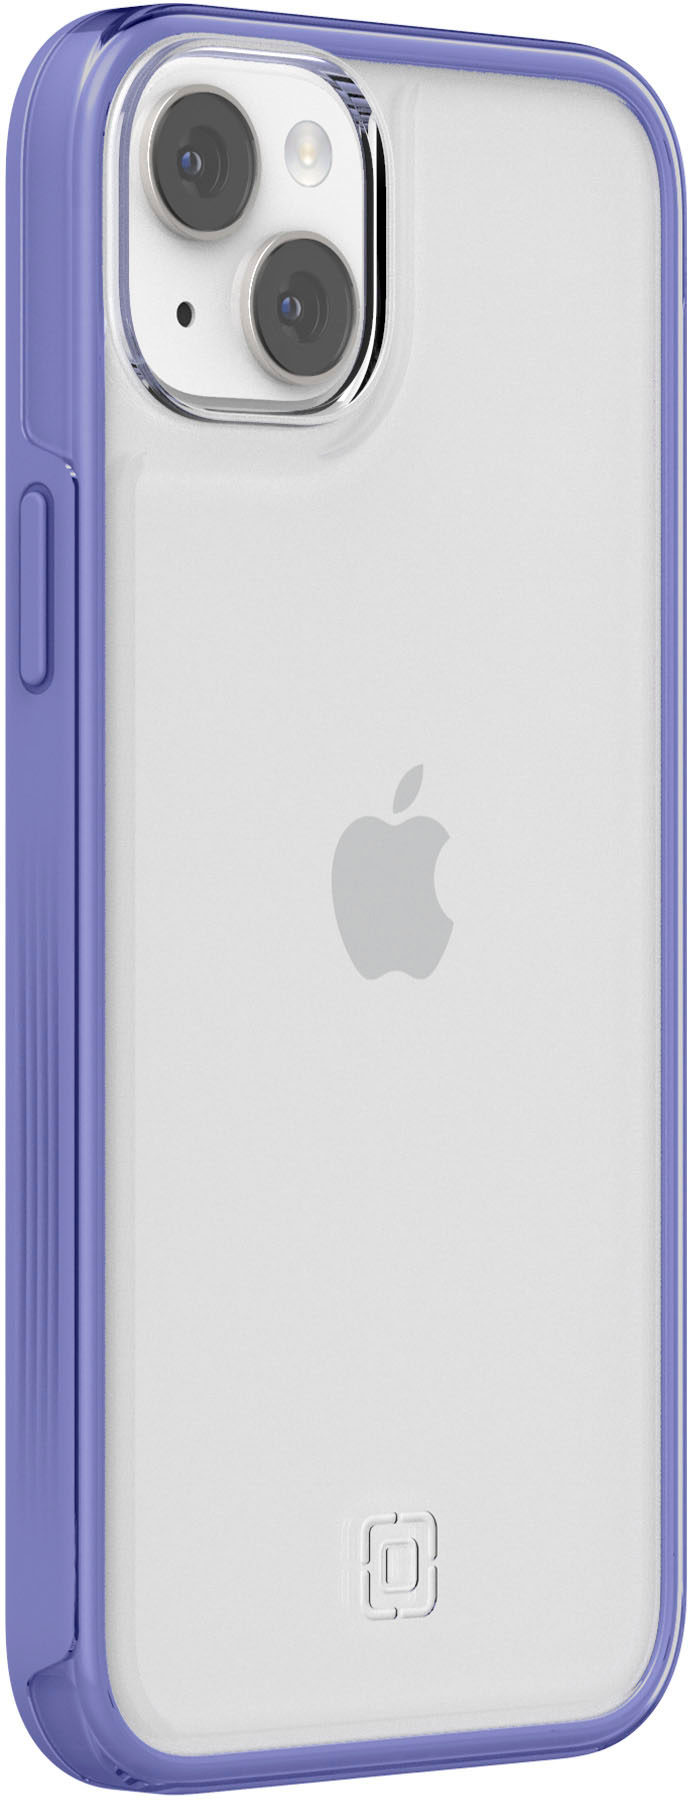 Evo Check - Apple iPhone 14 Pro Case - Wondrous Purple